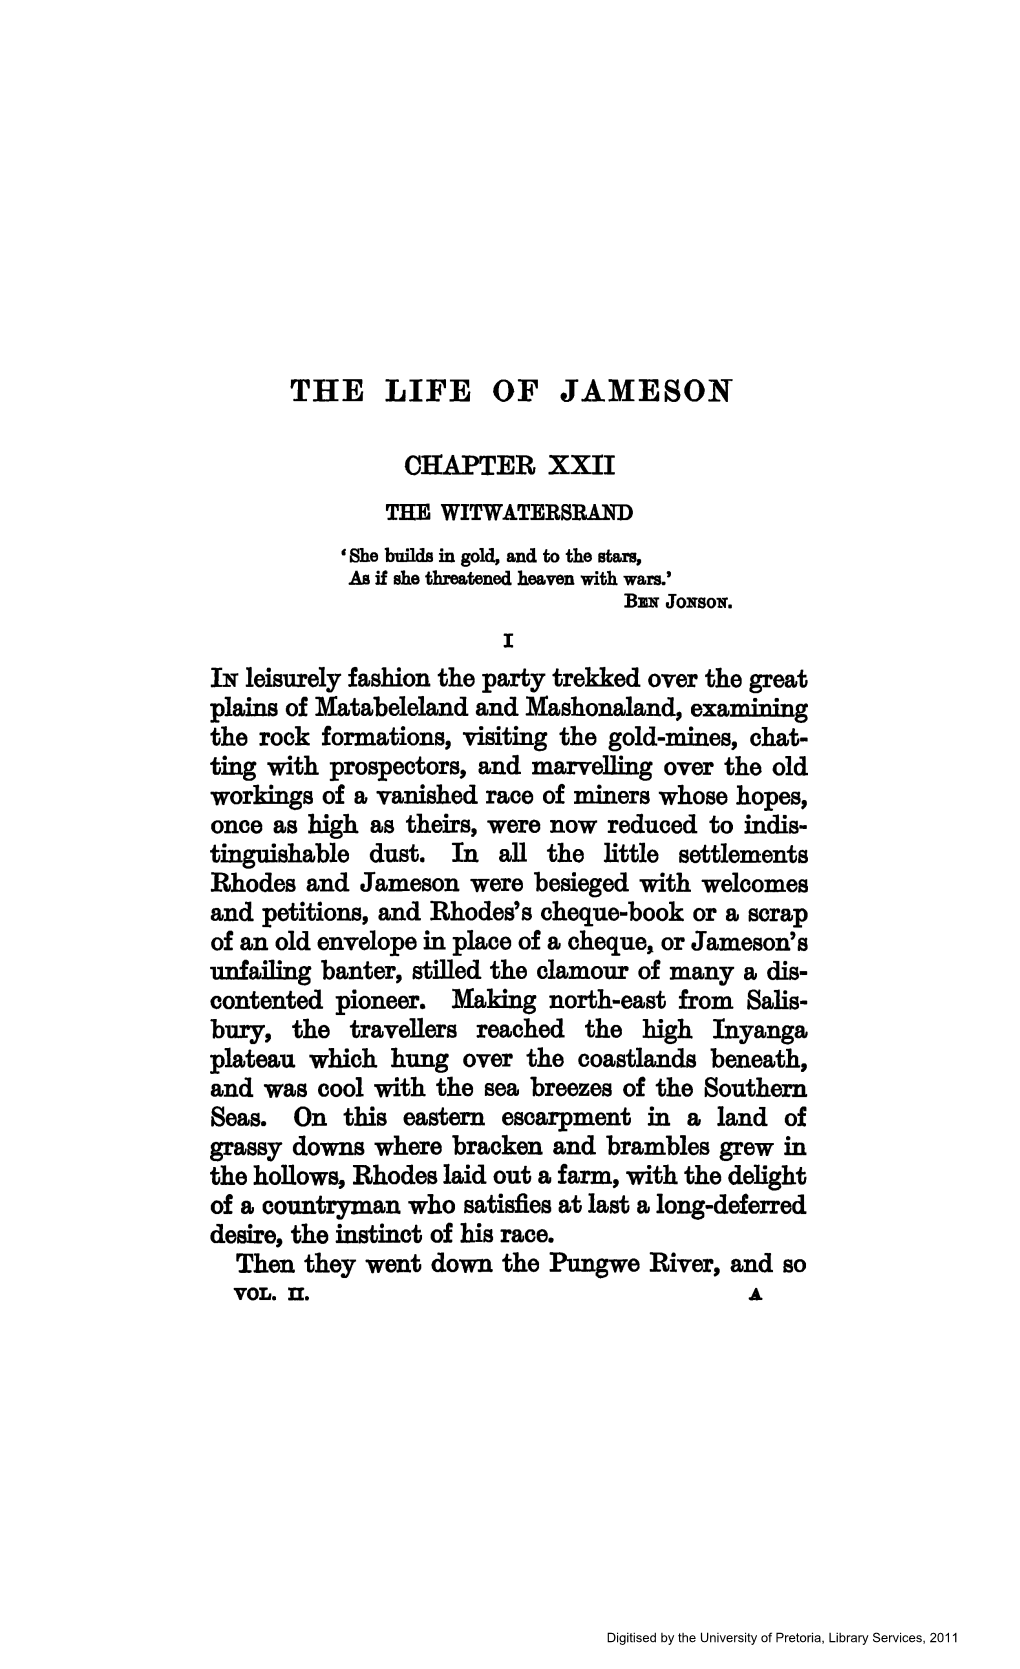 The Life of Jameson